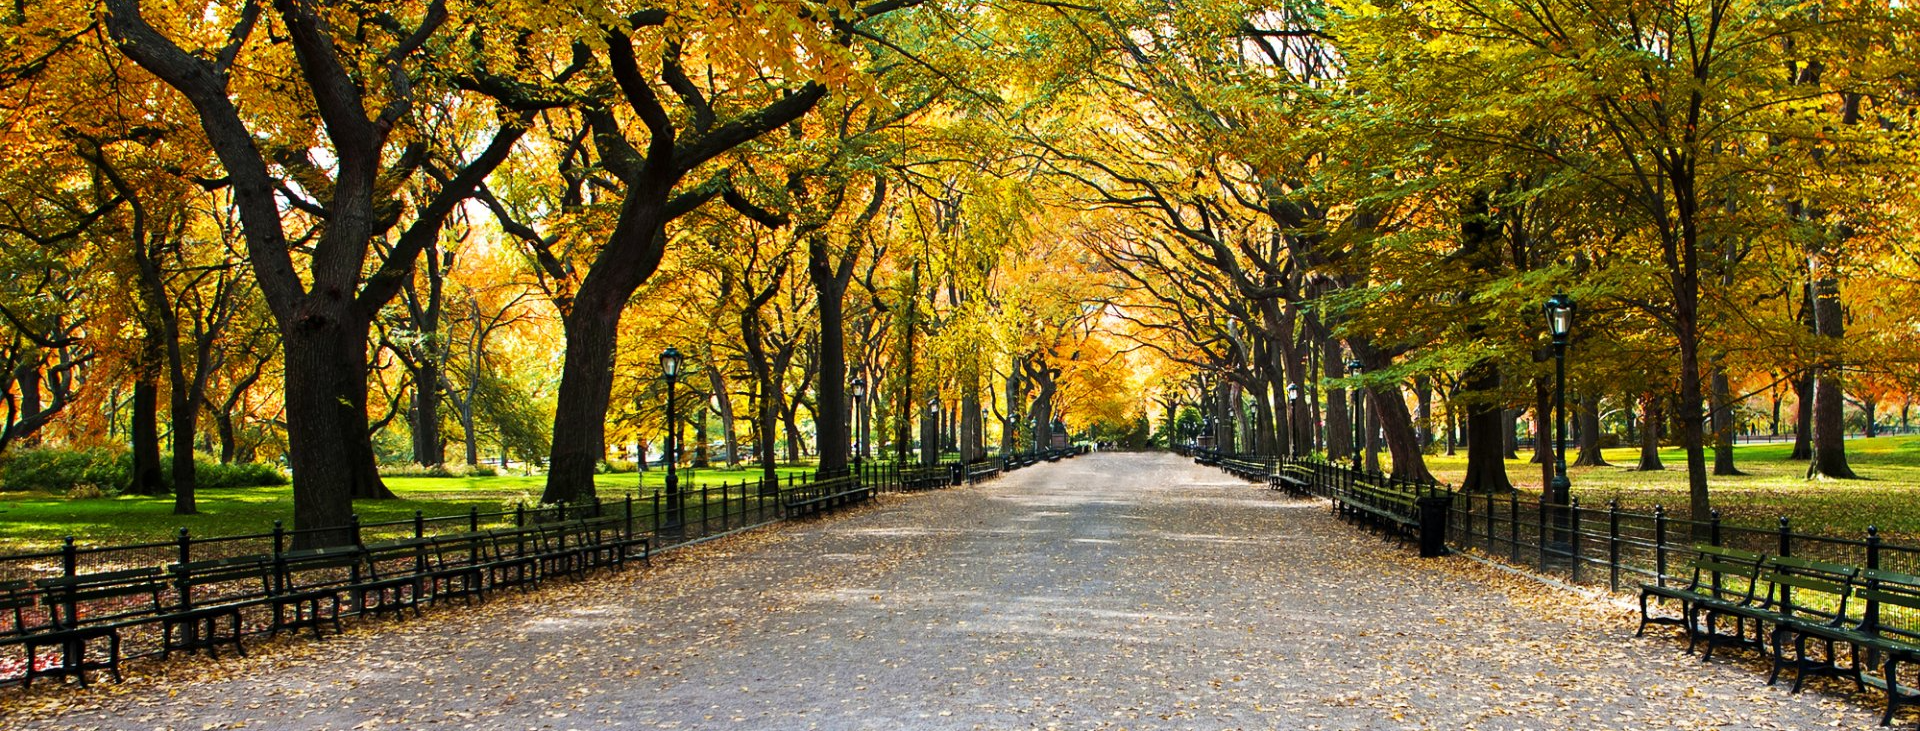 Central Park path in autumn